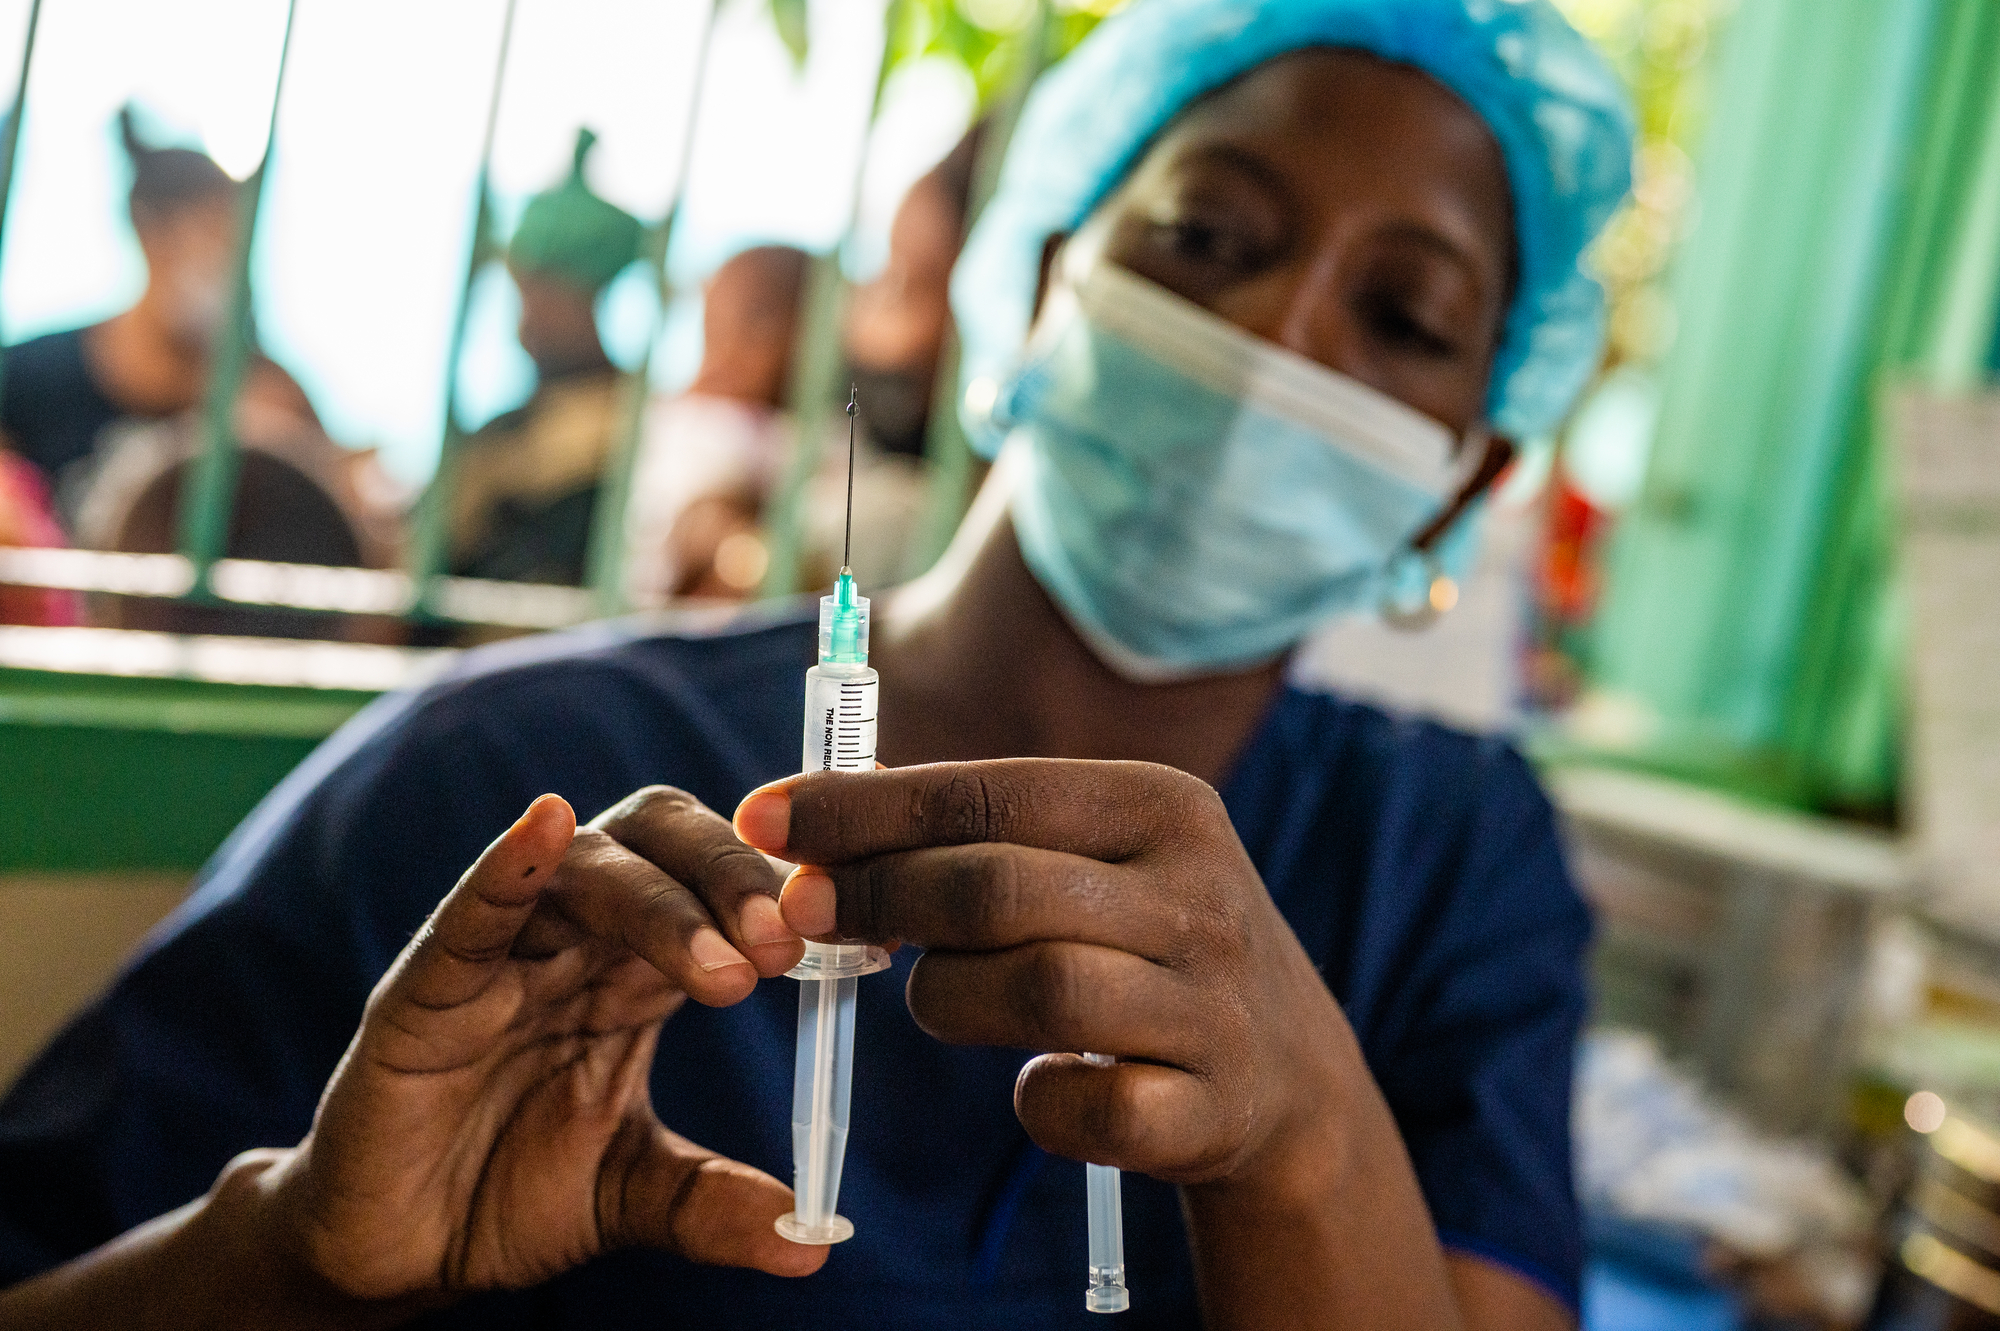 A nurse’s aide and staff member at the Philippe Maguilen Senghor Hospital, Dakar, Senegal